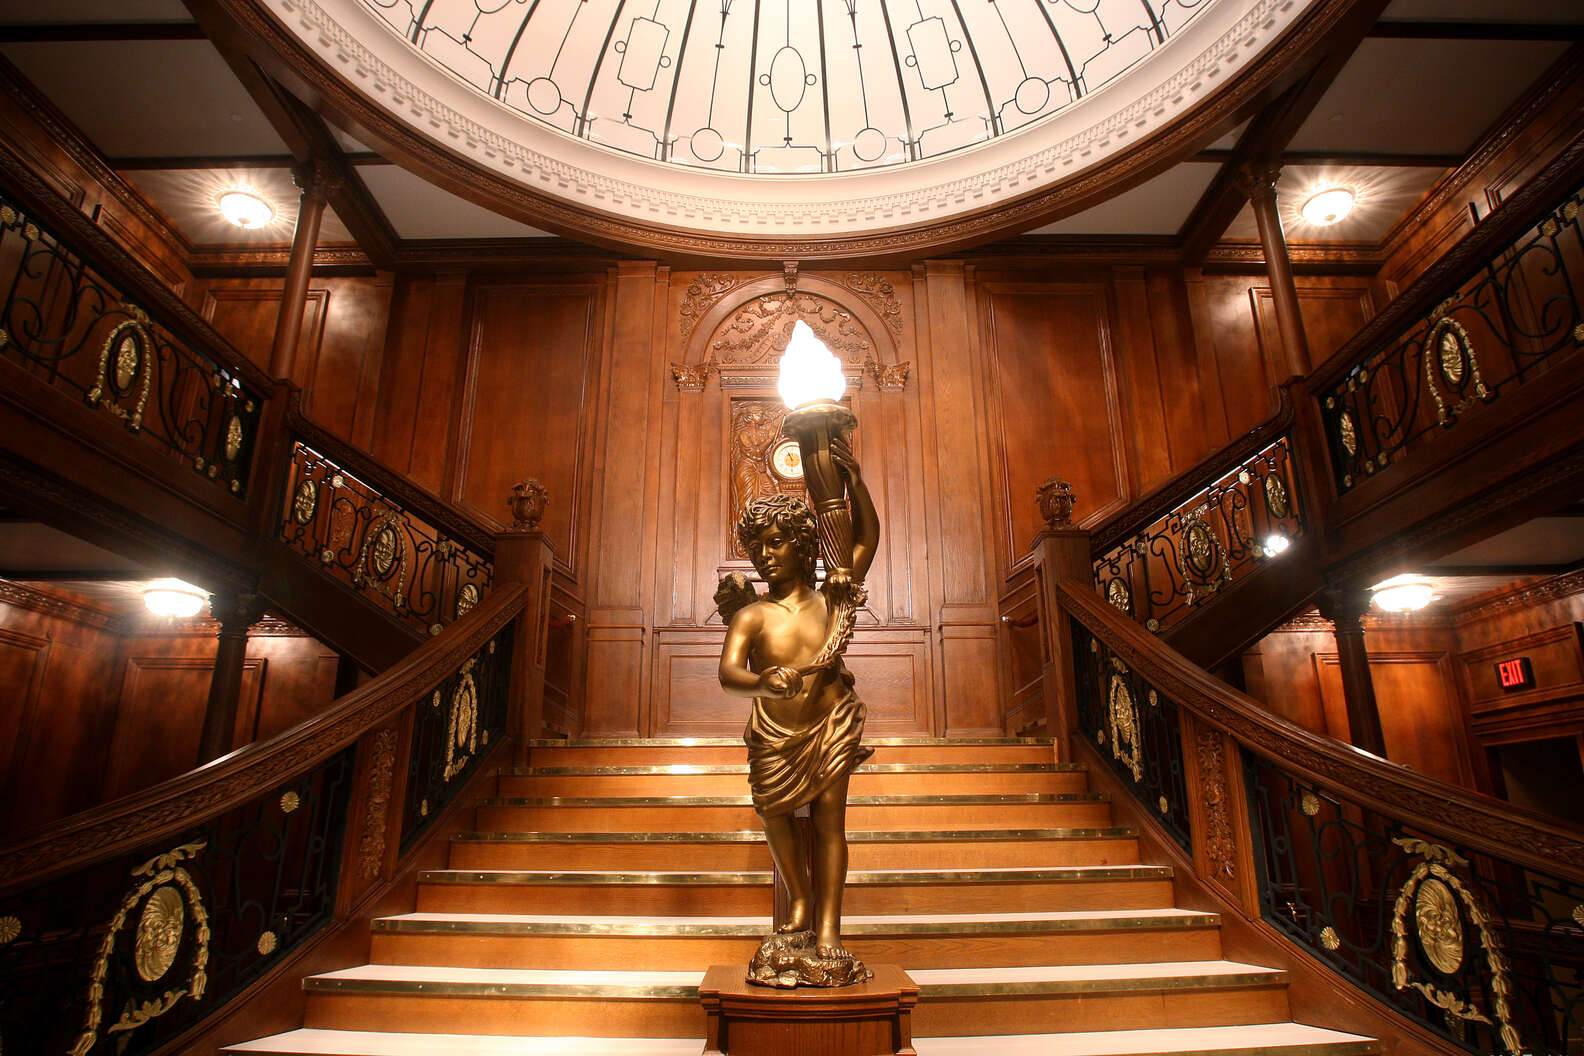 Courtesy of Titanic: The Artifact Exhibition